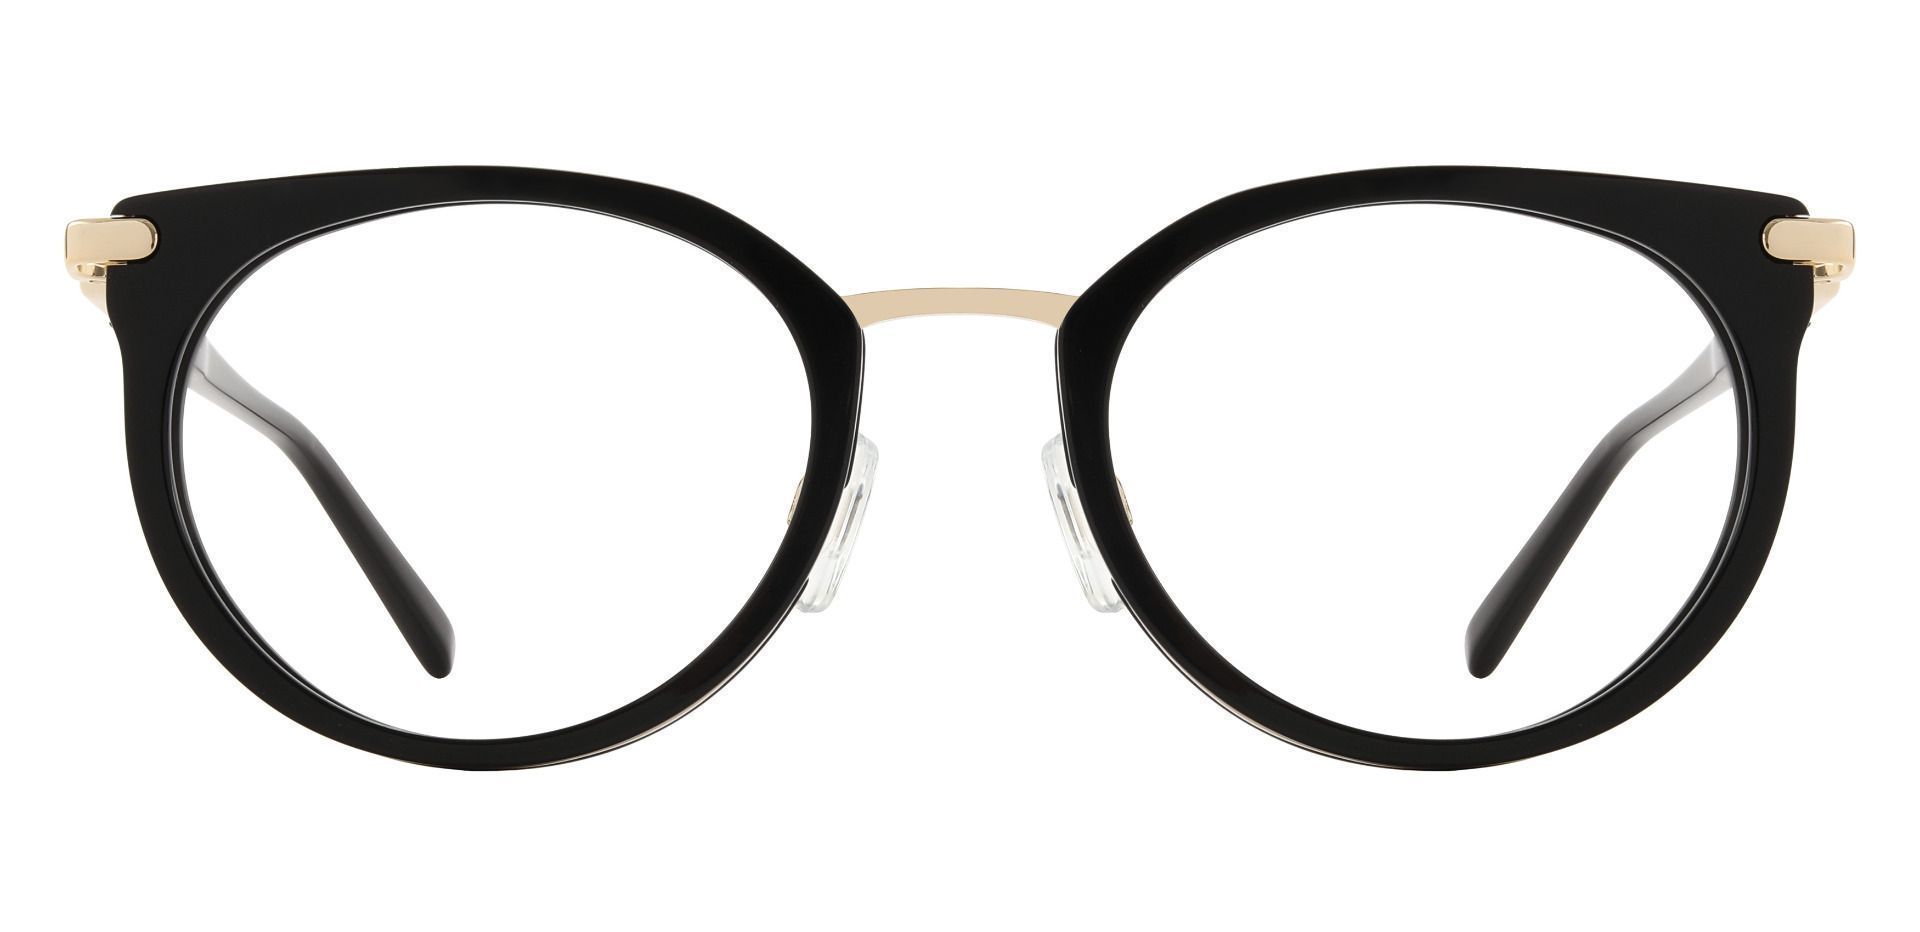 Louisville Oval Reading Glasses - Black